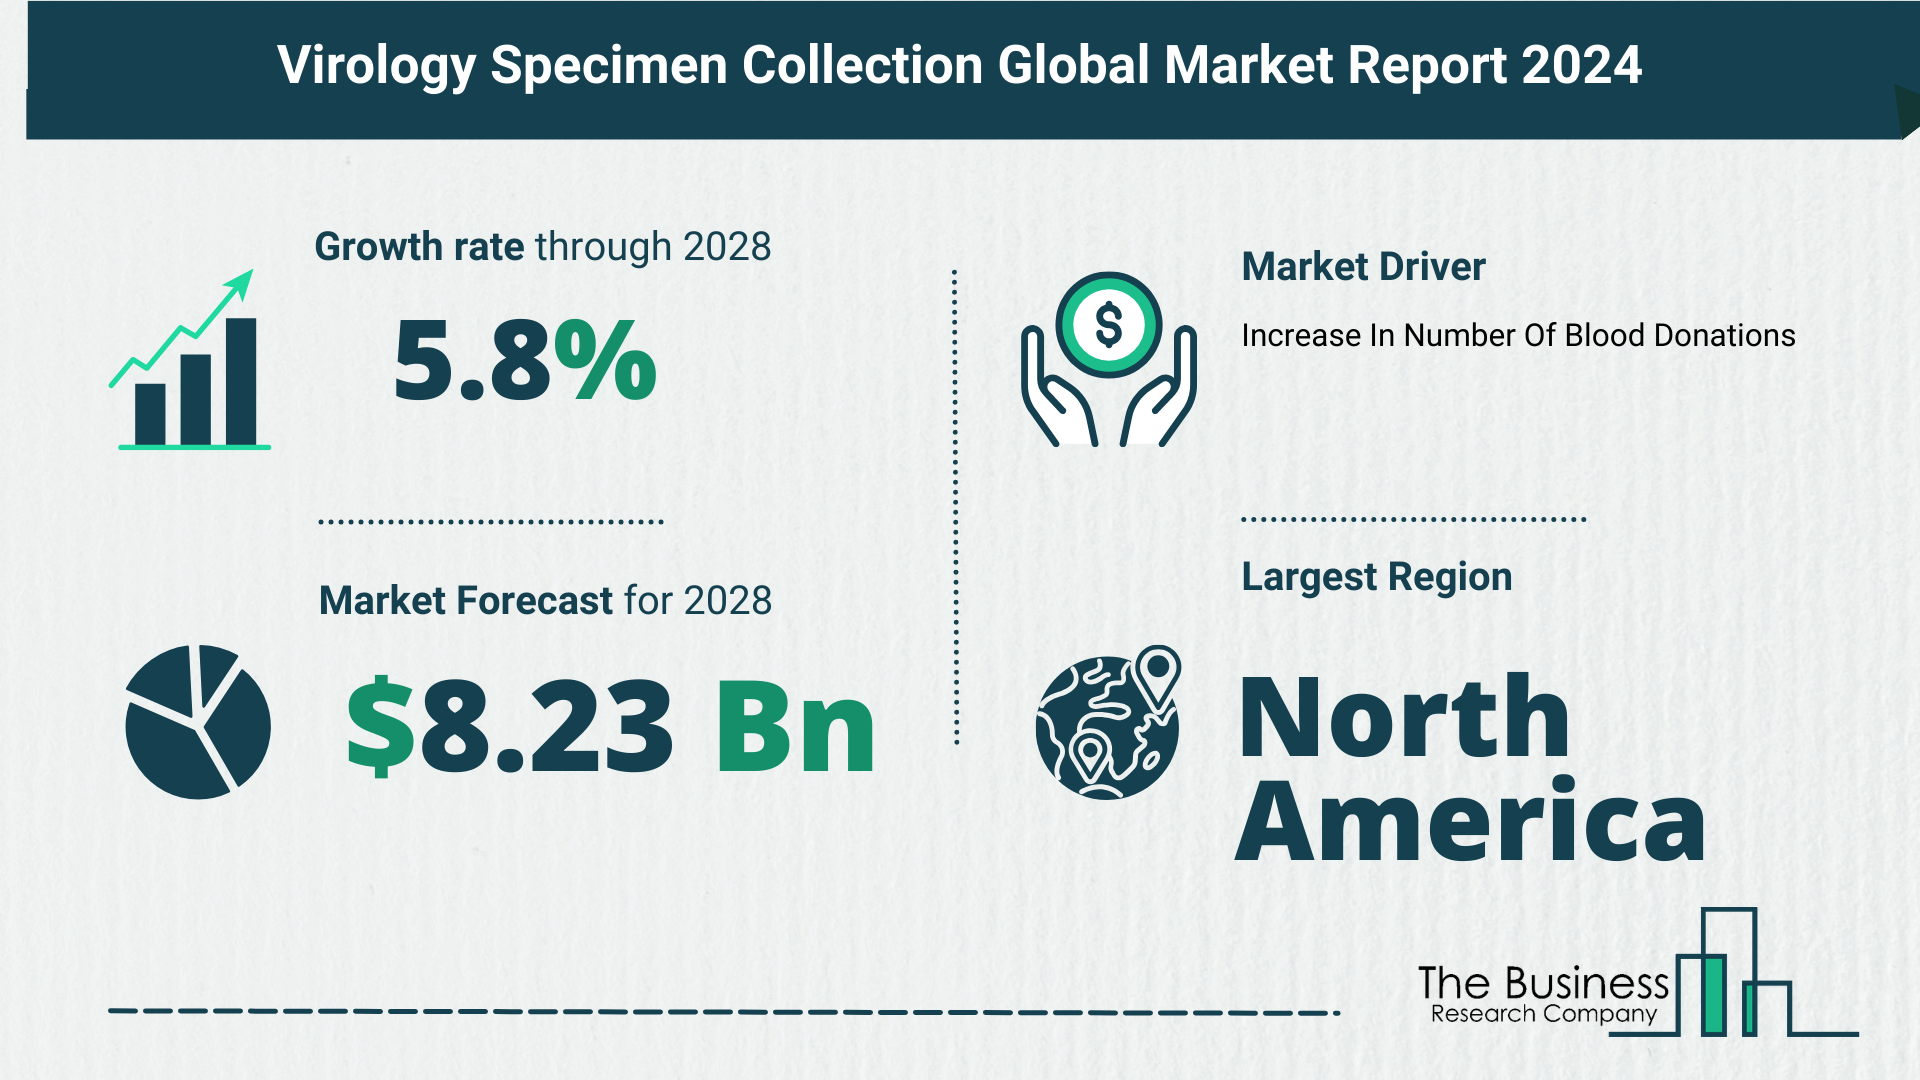 Global Virology Specimen Collection Market Report 2024 – Top Market Trends And Opportunities